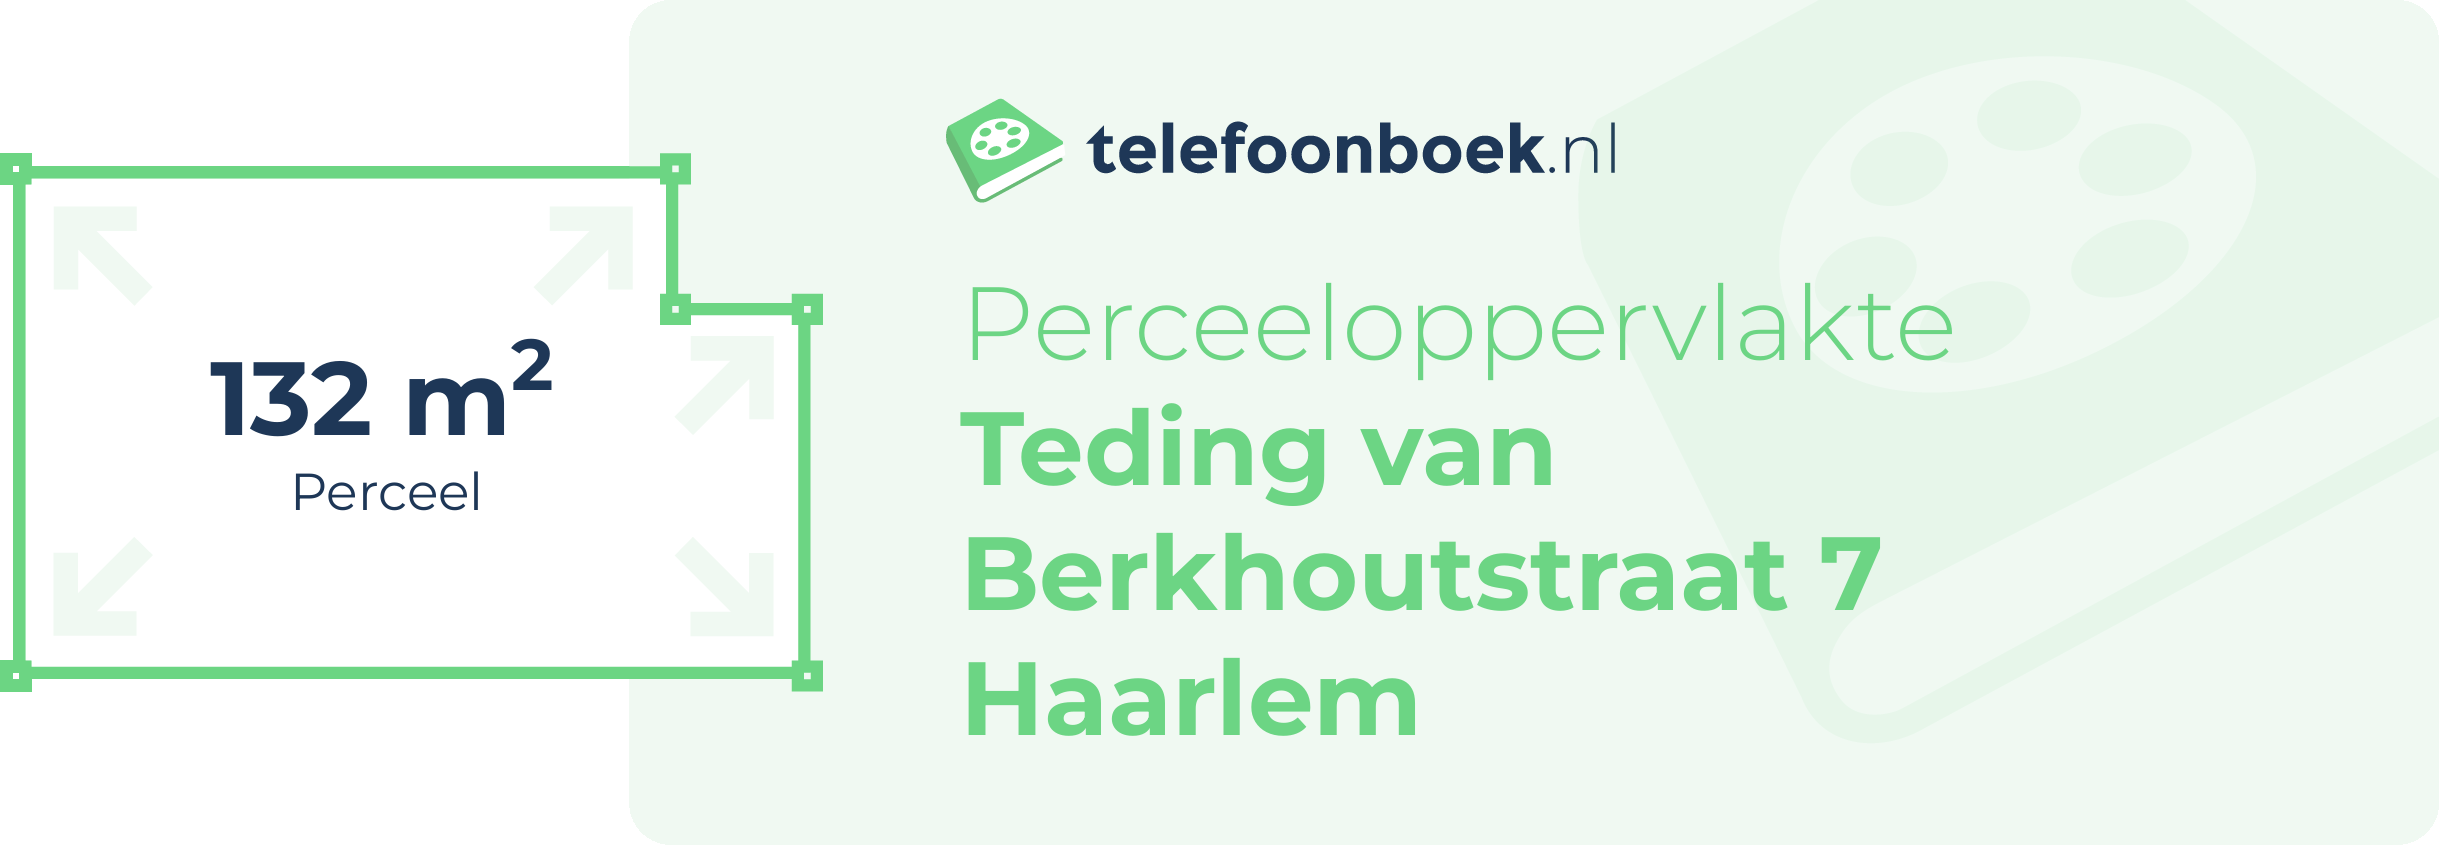 Perceeloppervlakte Teding Van Berkhoutstraat 7 Haarlem